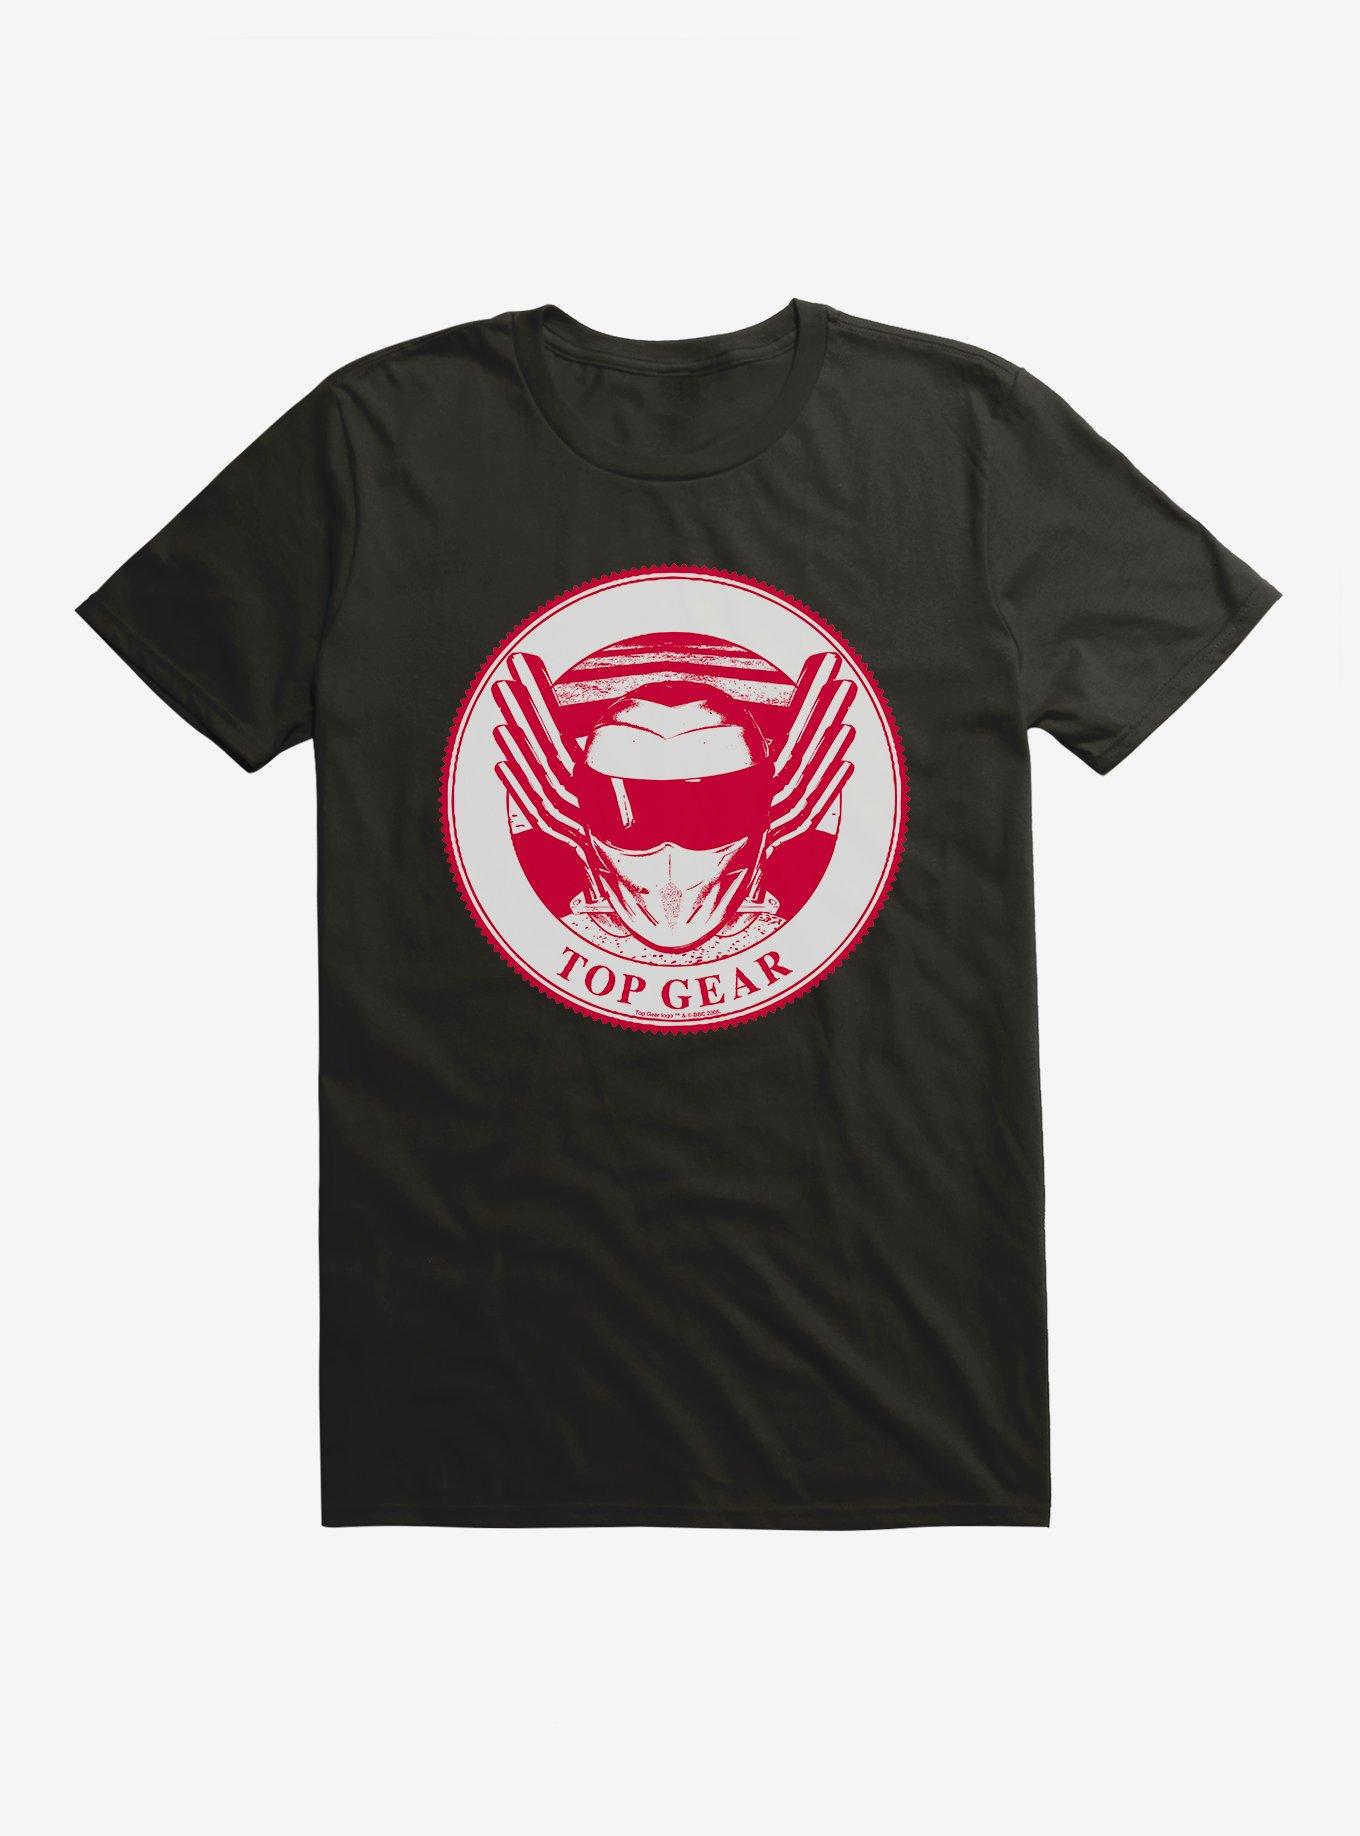 Top Gear Stig Stamp T-Shirt